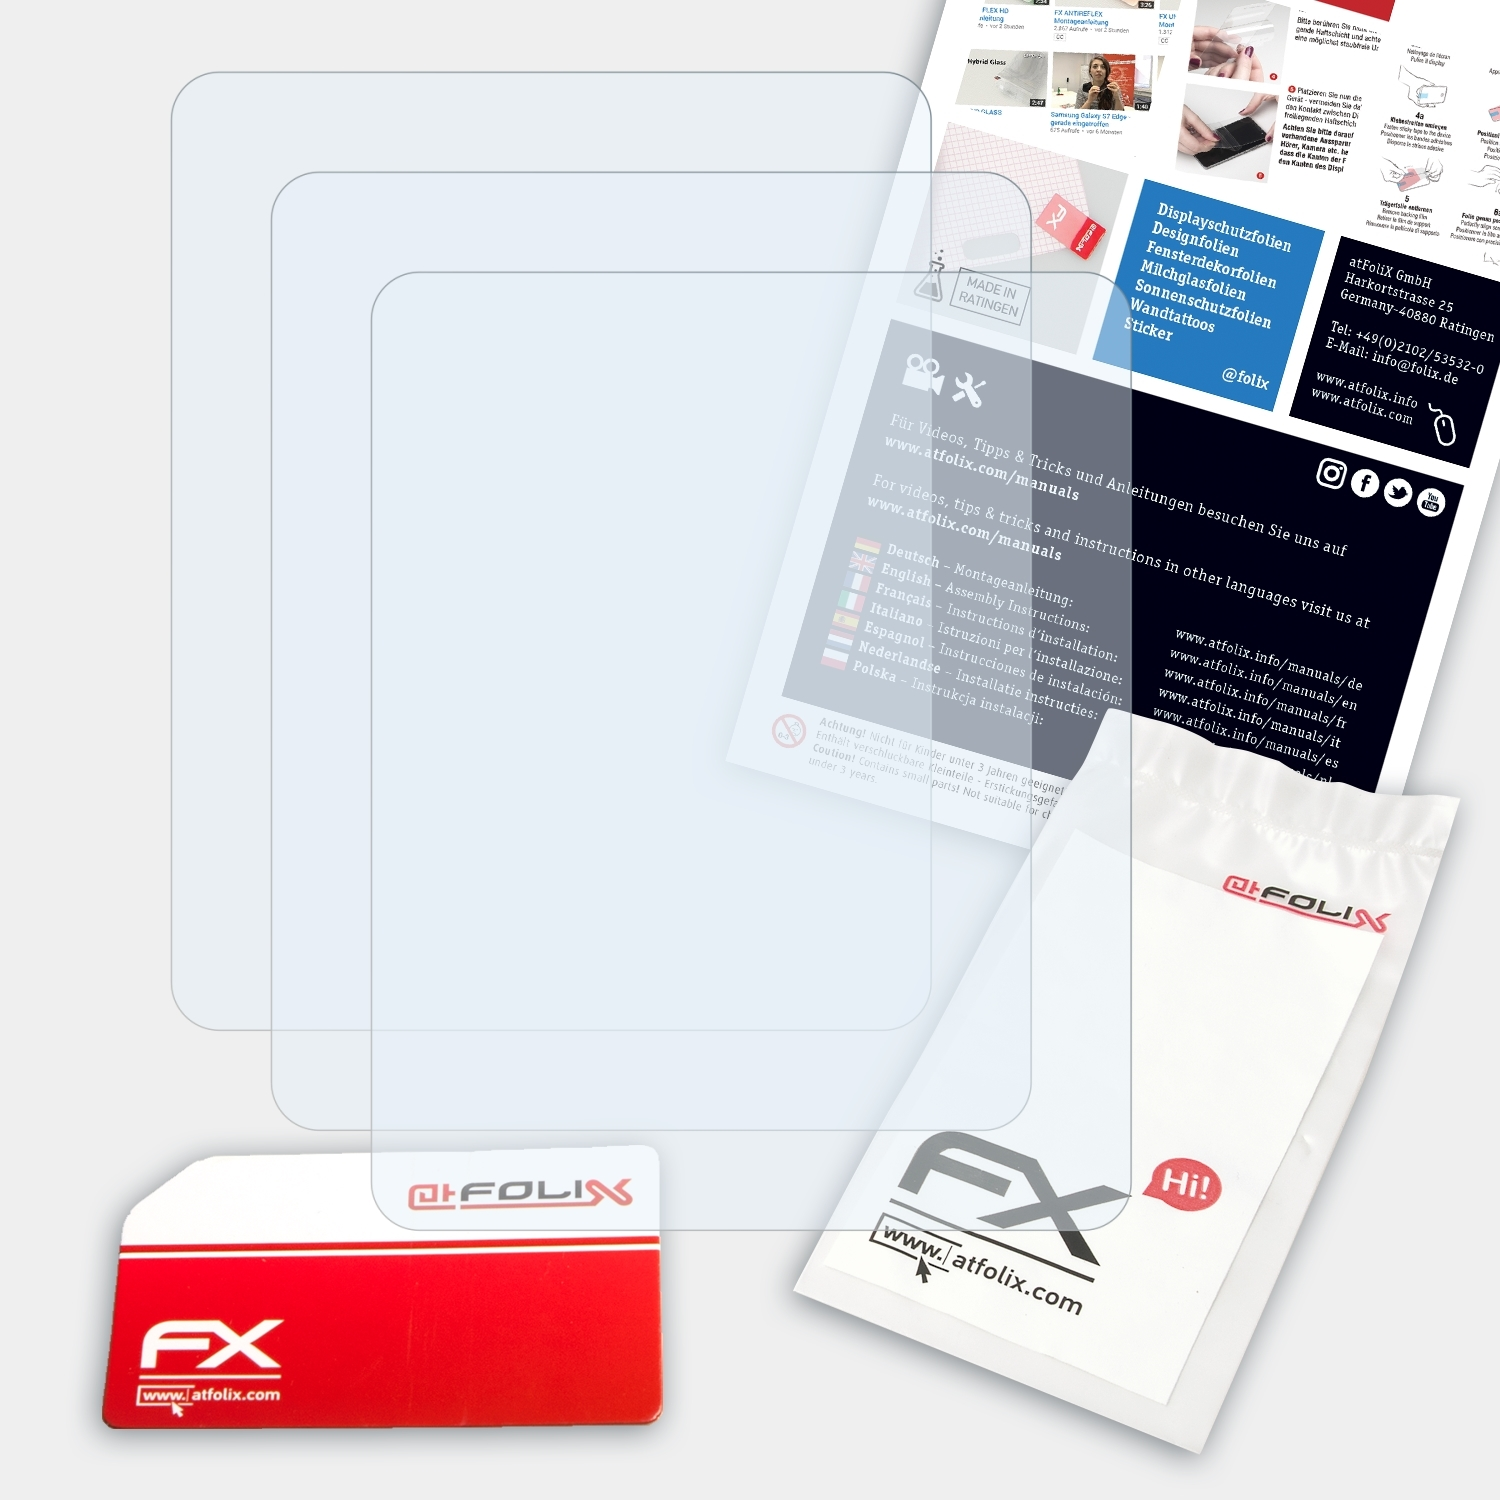 FX-Clear Displayschutz(für ATFOLIX Bertronic BC 910) 3x